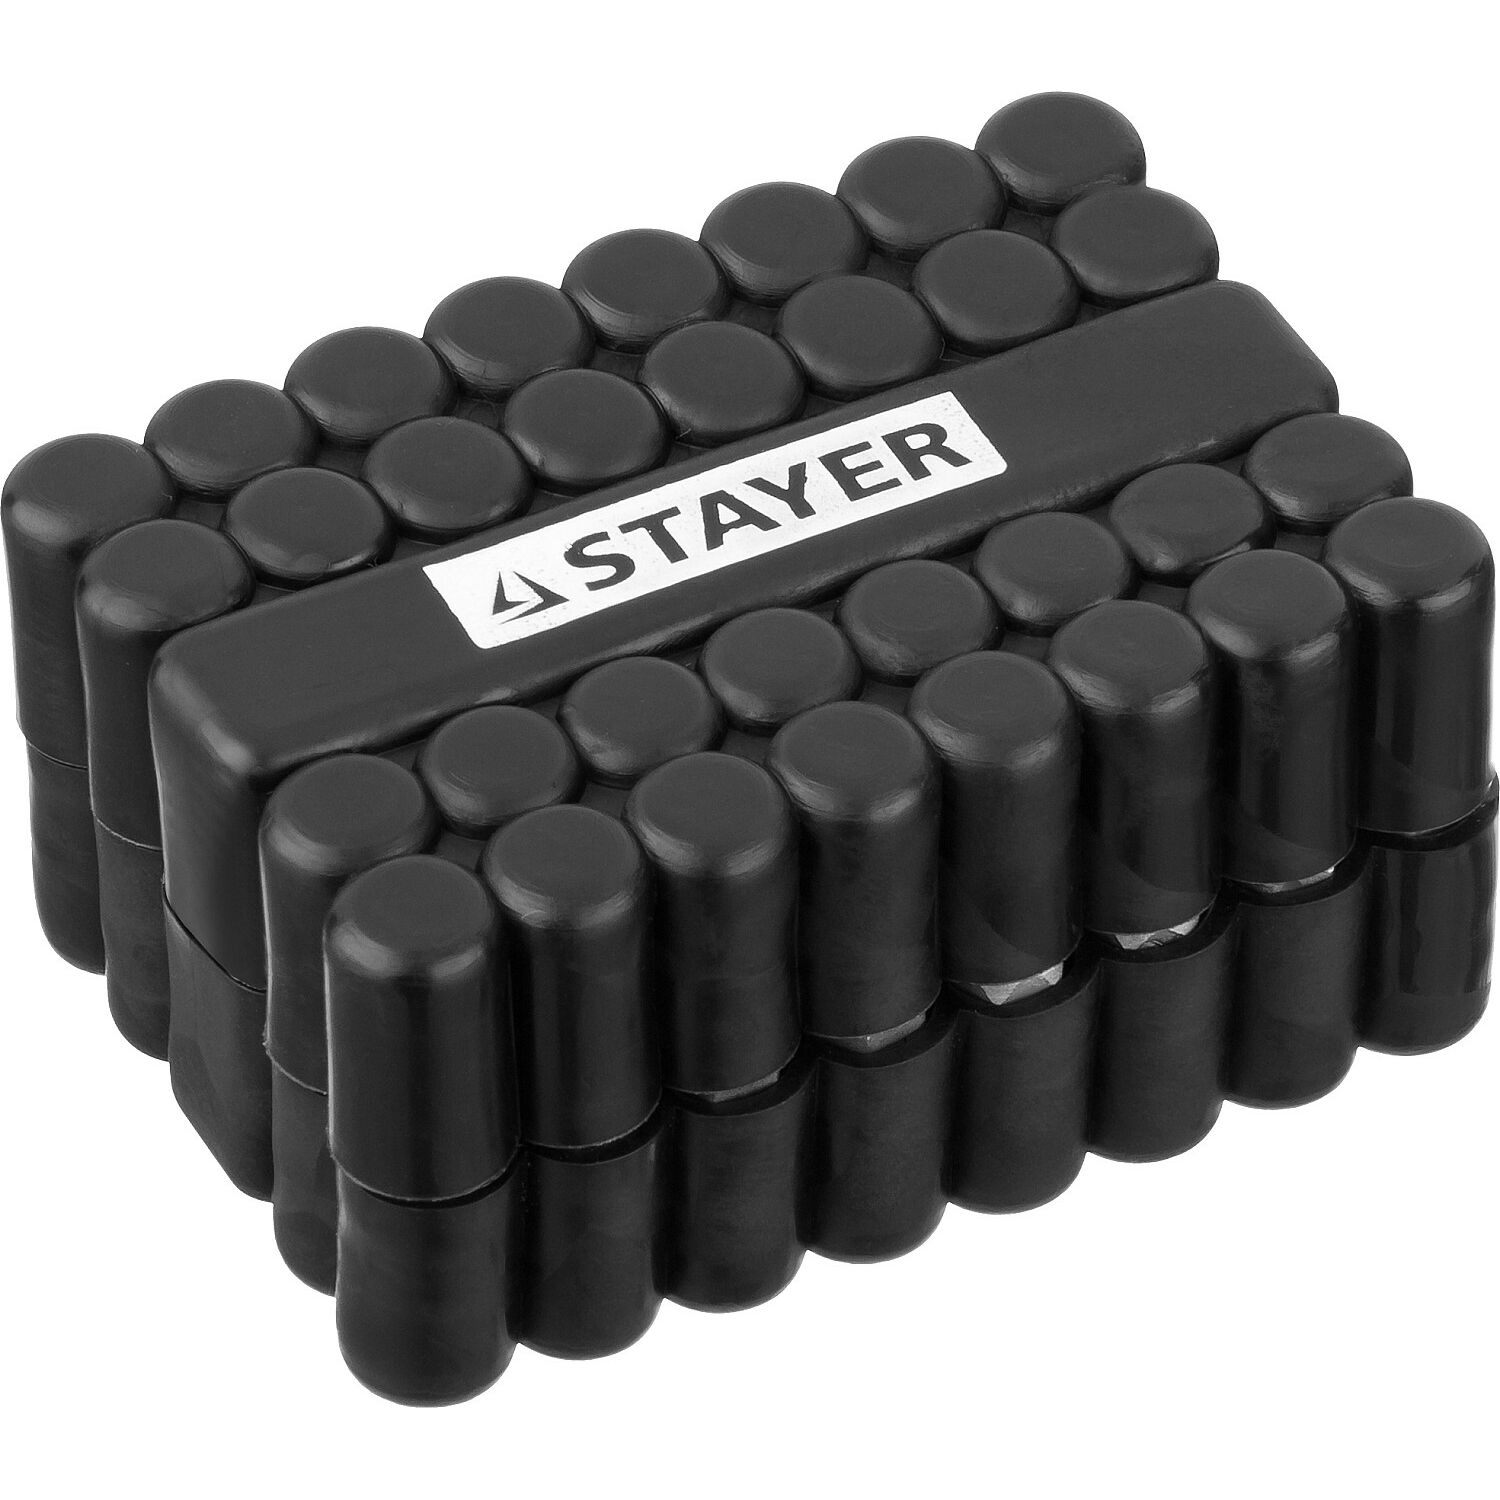 Бит master. Набор бит с адаптером Stayer 33 шт. 26085-H33. Набор специальных бит Stayer Master 26084-h33. Набор специальных бит "Stayer", 33 предмета.. Набор специальных бит Stayer 33 шт. 26084-H33.